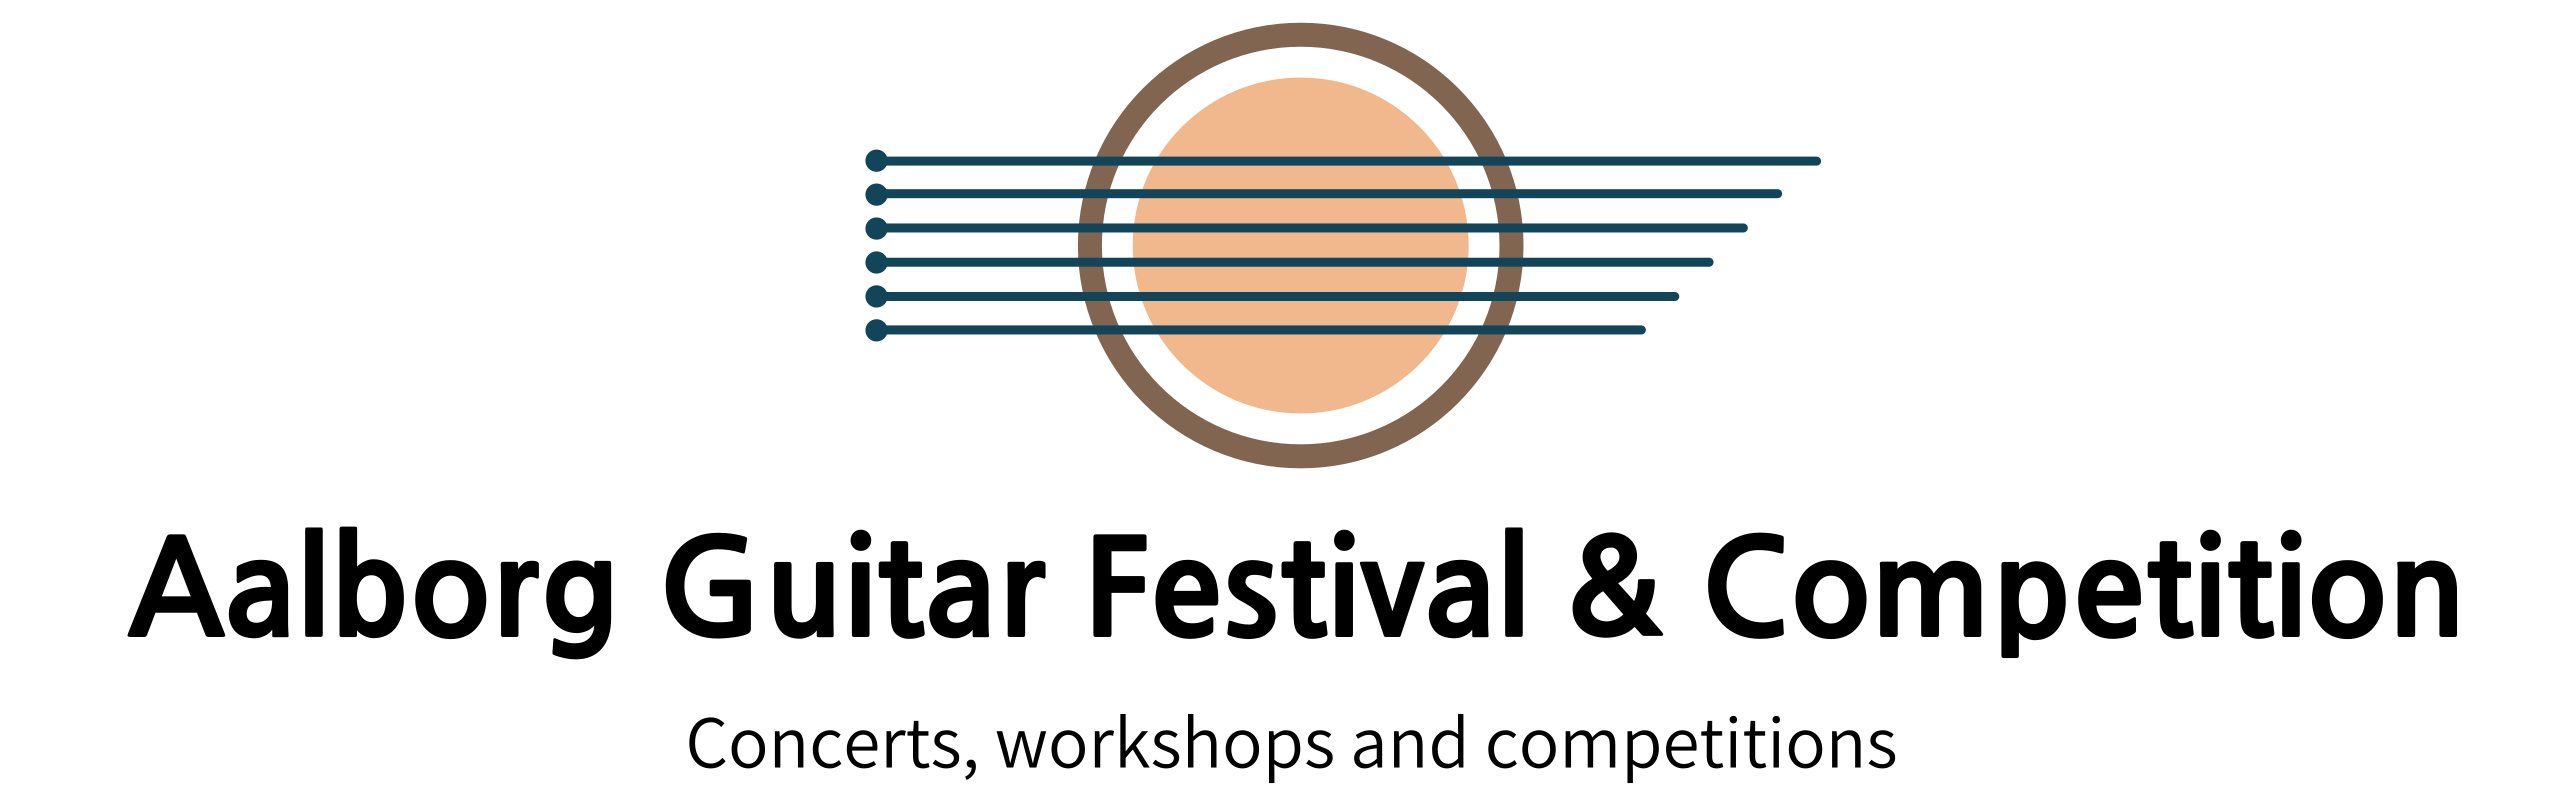 GDPR - image Transparent-Logo3 on https://aalborgguitarfestival.com